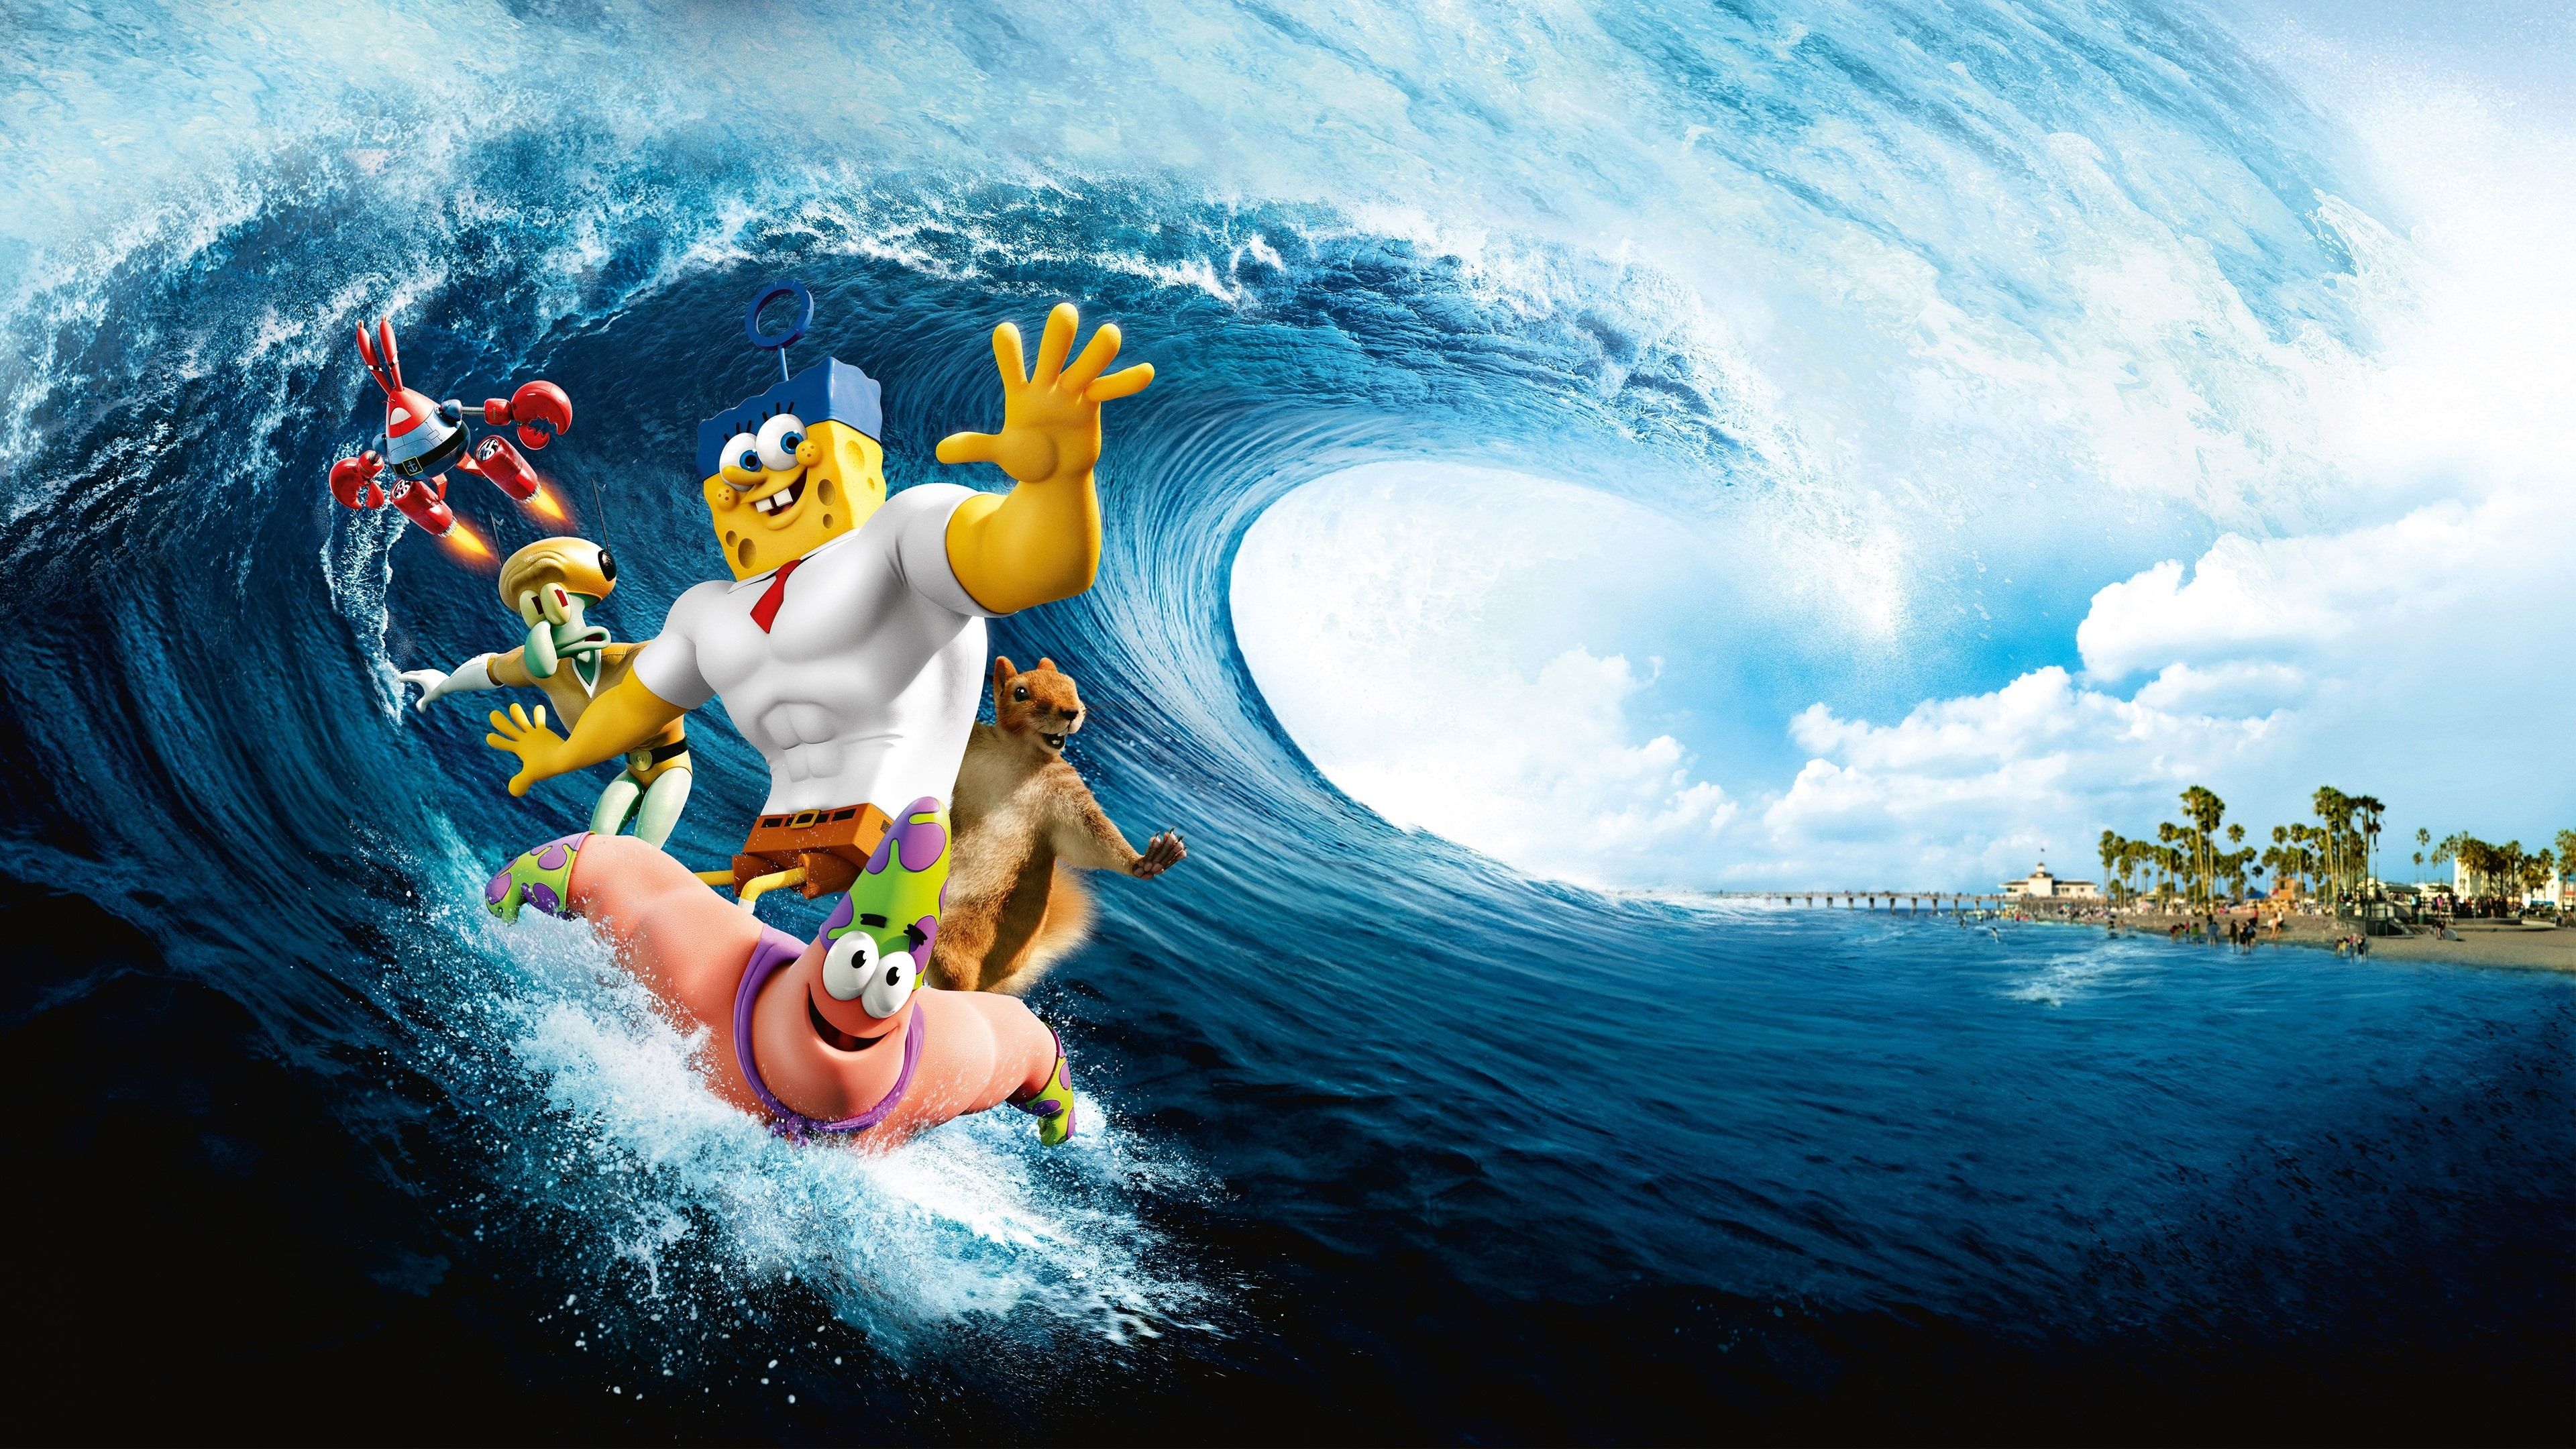 Wallpaper Spongebob cartoon movie 3840x2160 UHD 4K Picture, Image